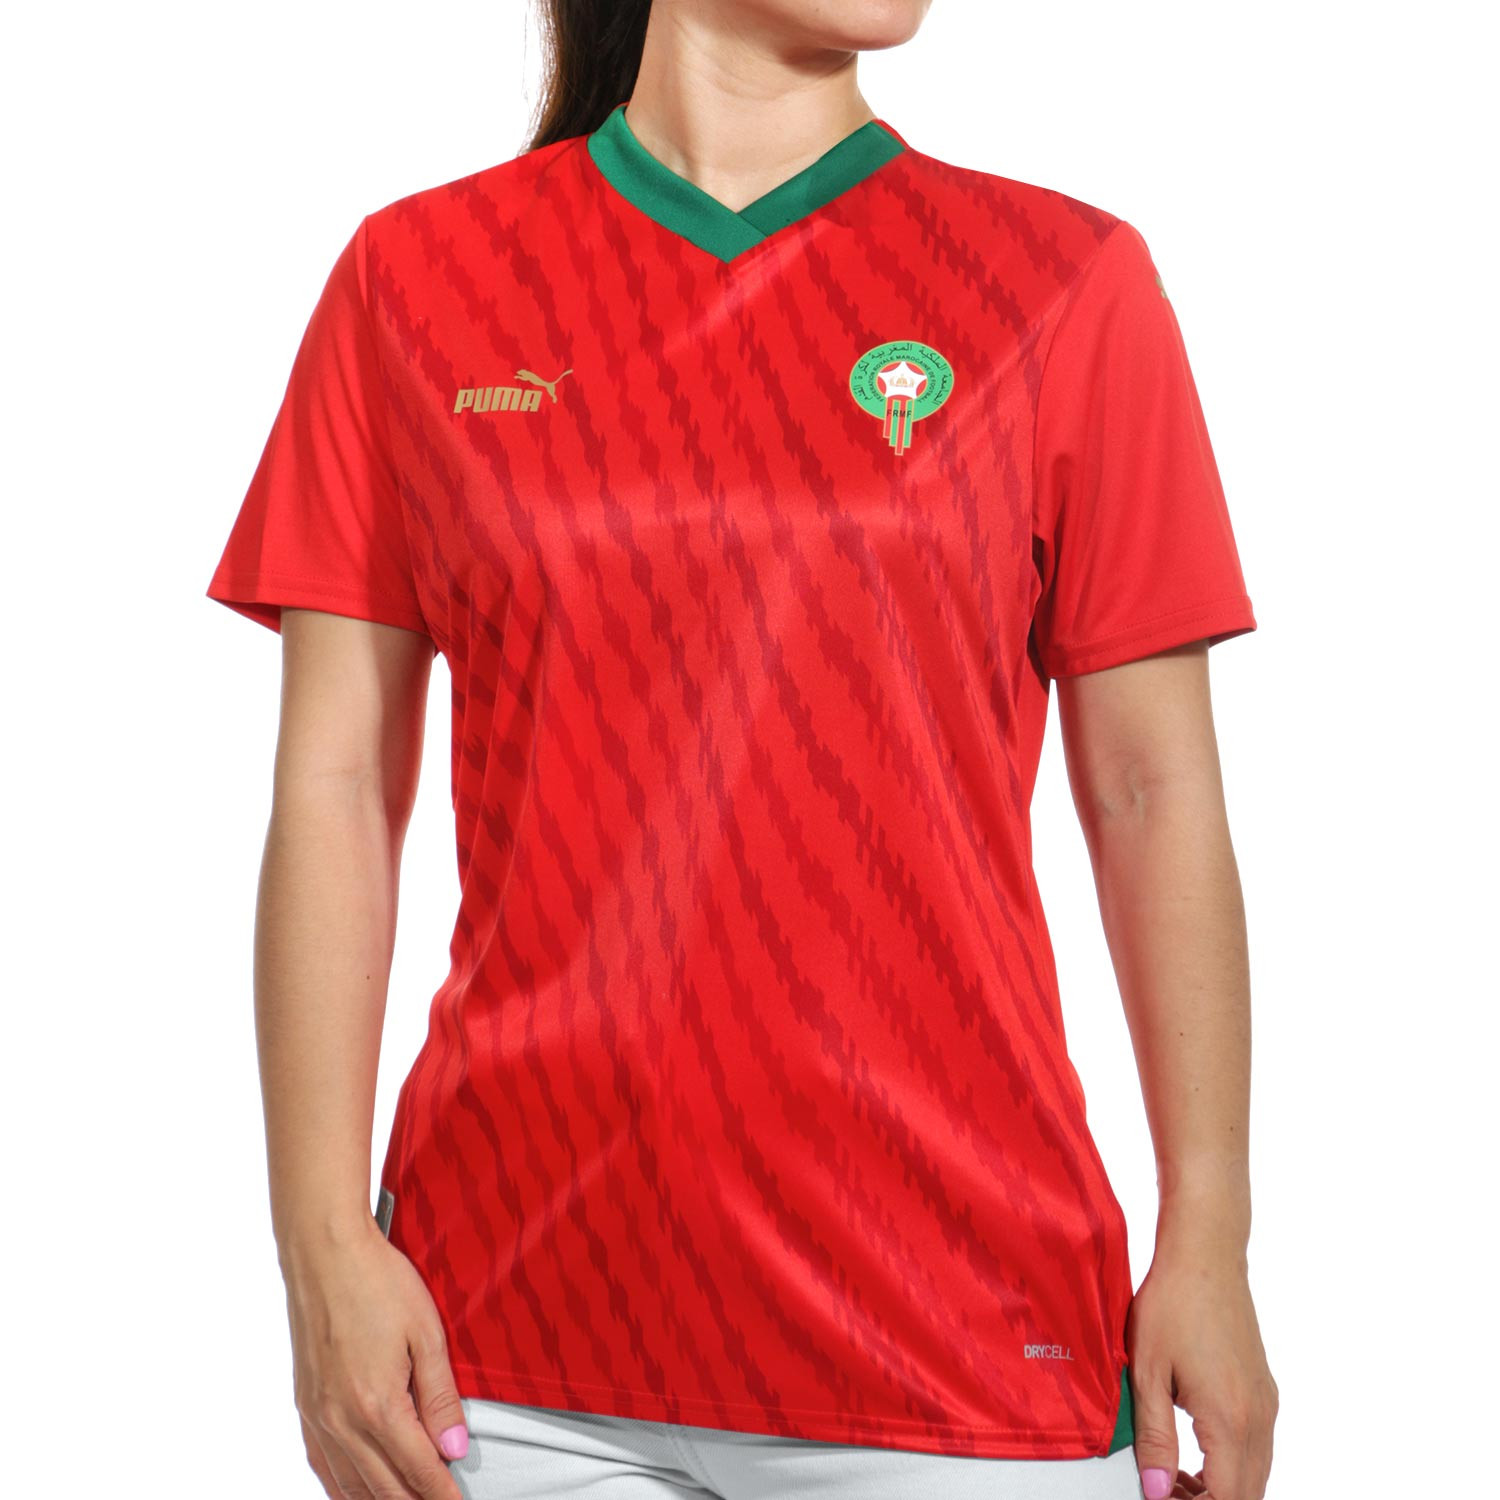 Charles Keasing basura apasionado Camiseta Puma Marruecos mujer 2023 roja verde | futbolmania